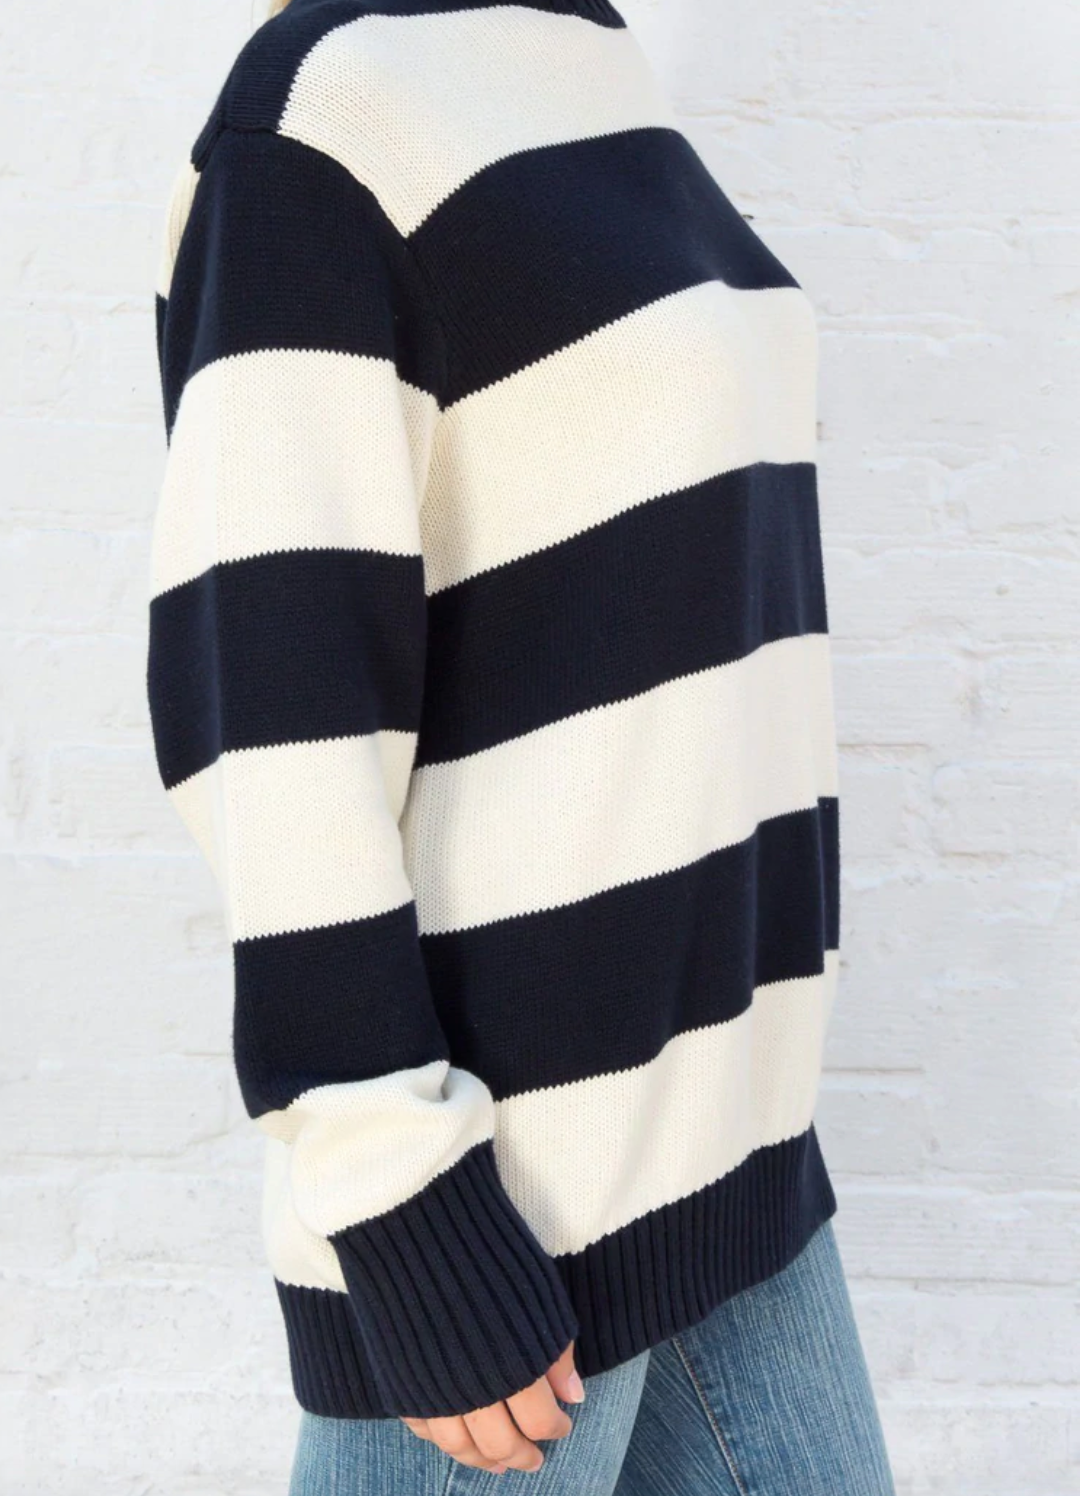 Cotton Stripe Sweater